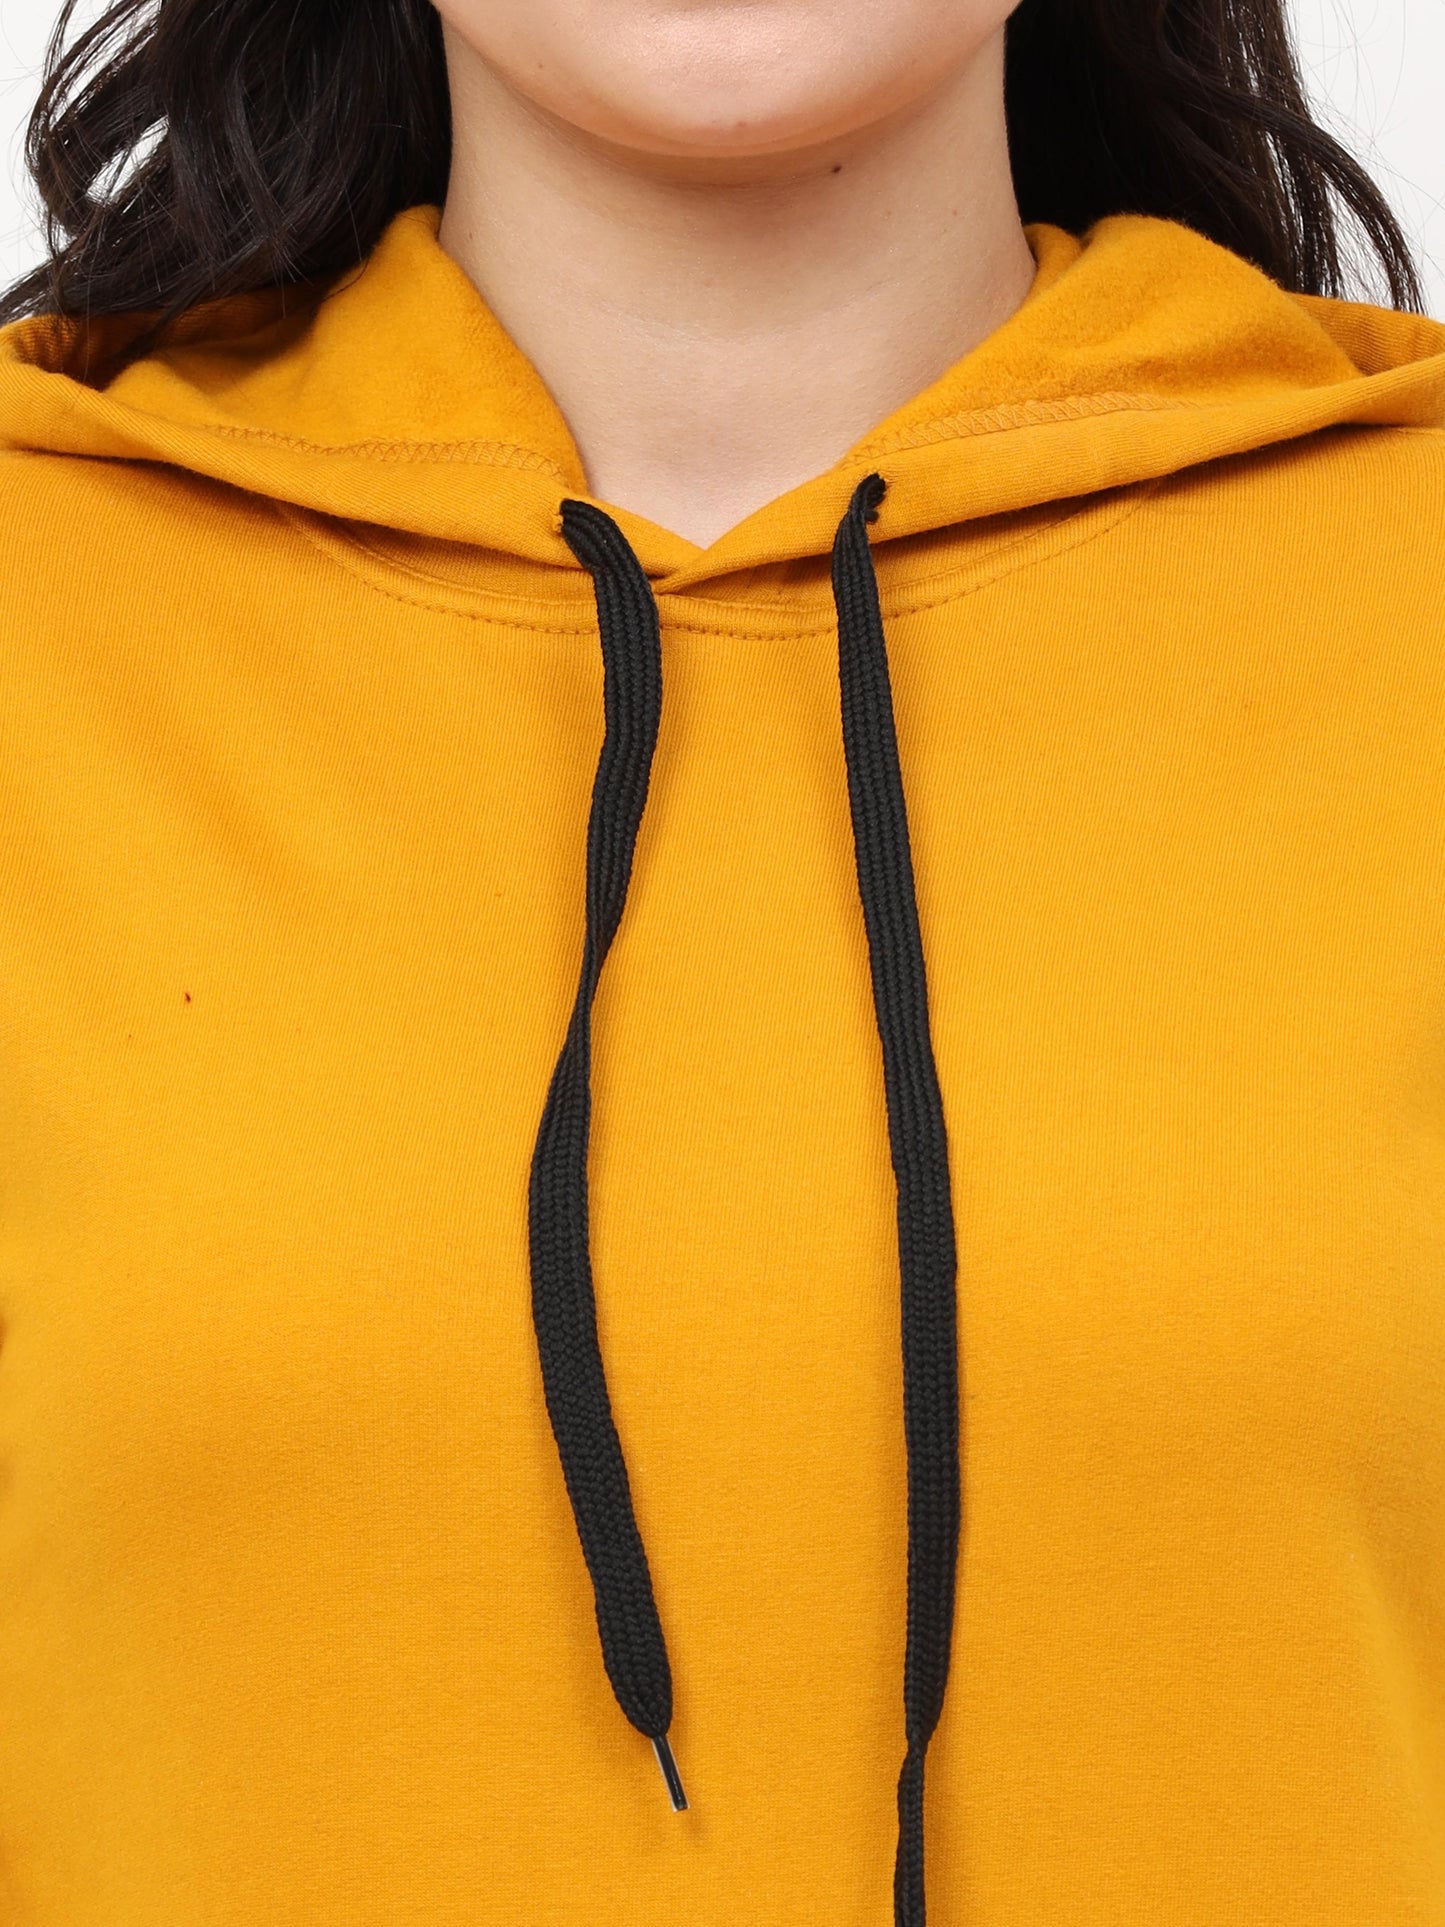 Women's Cotton Plain Mustard Yellow Color Sweatshirt Hoodies